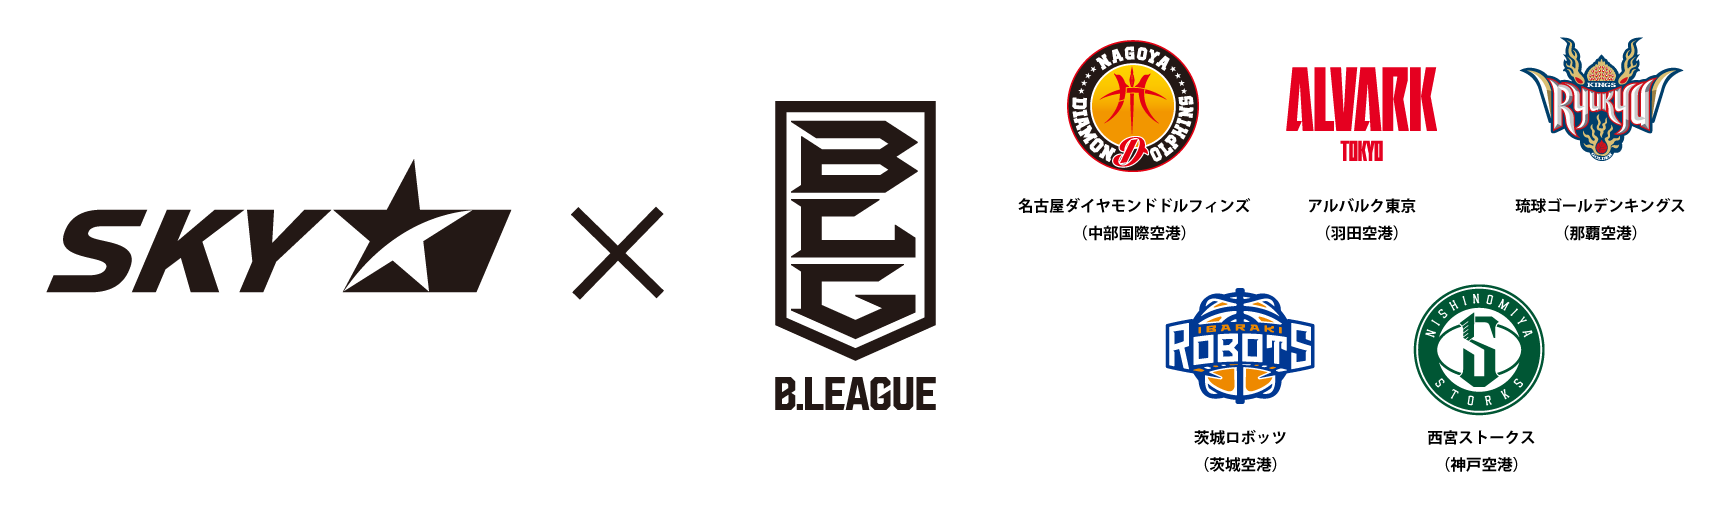 News B League Bリーグ 公式サイト